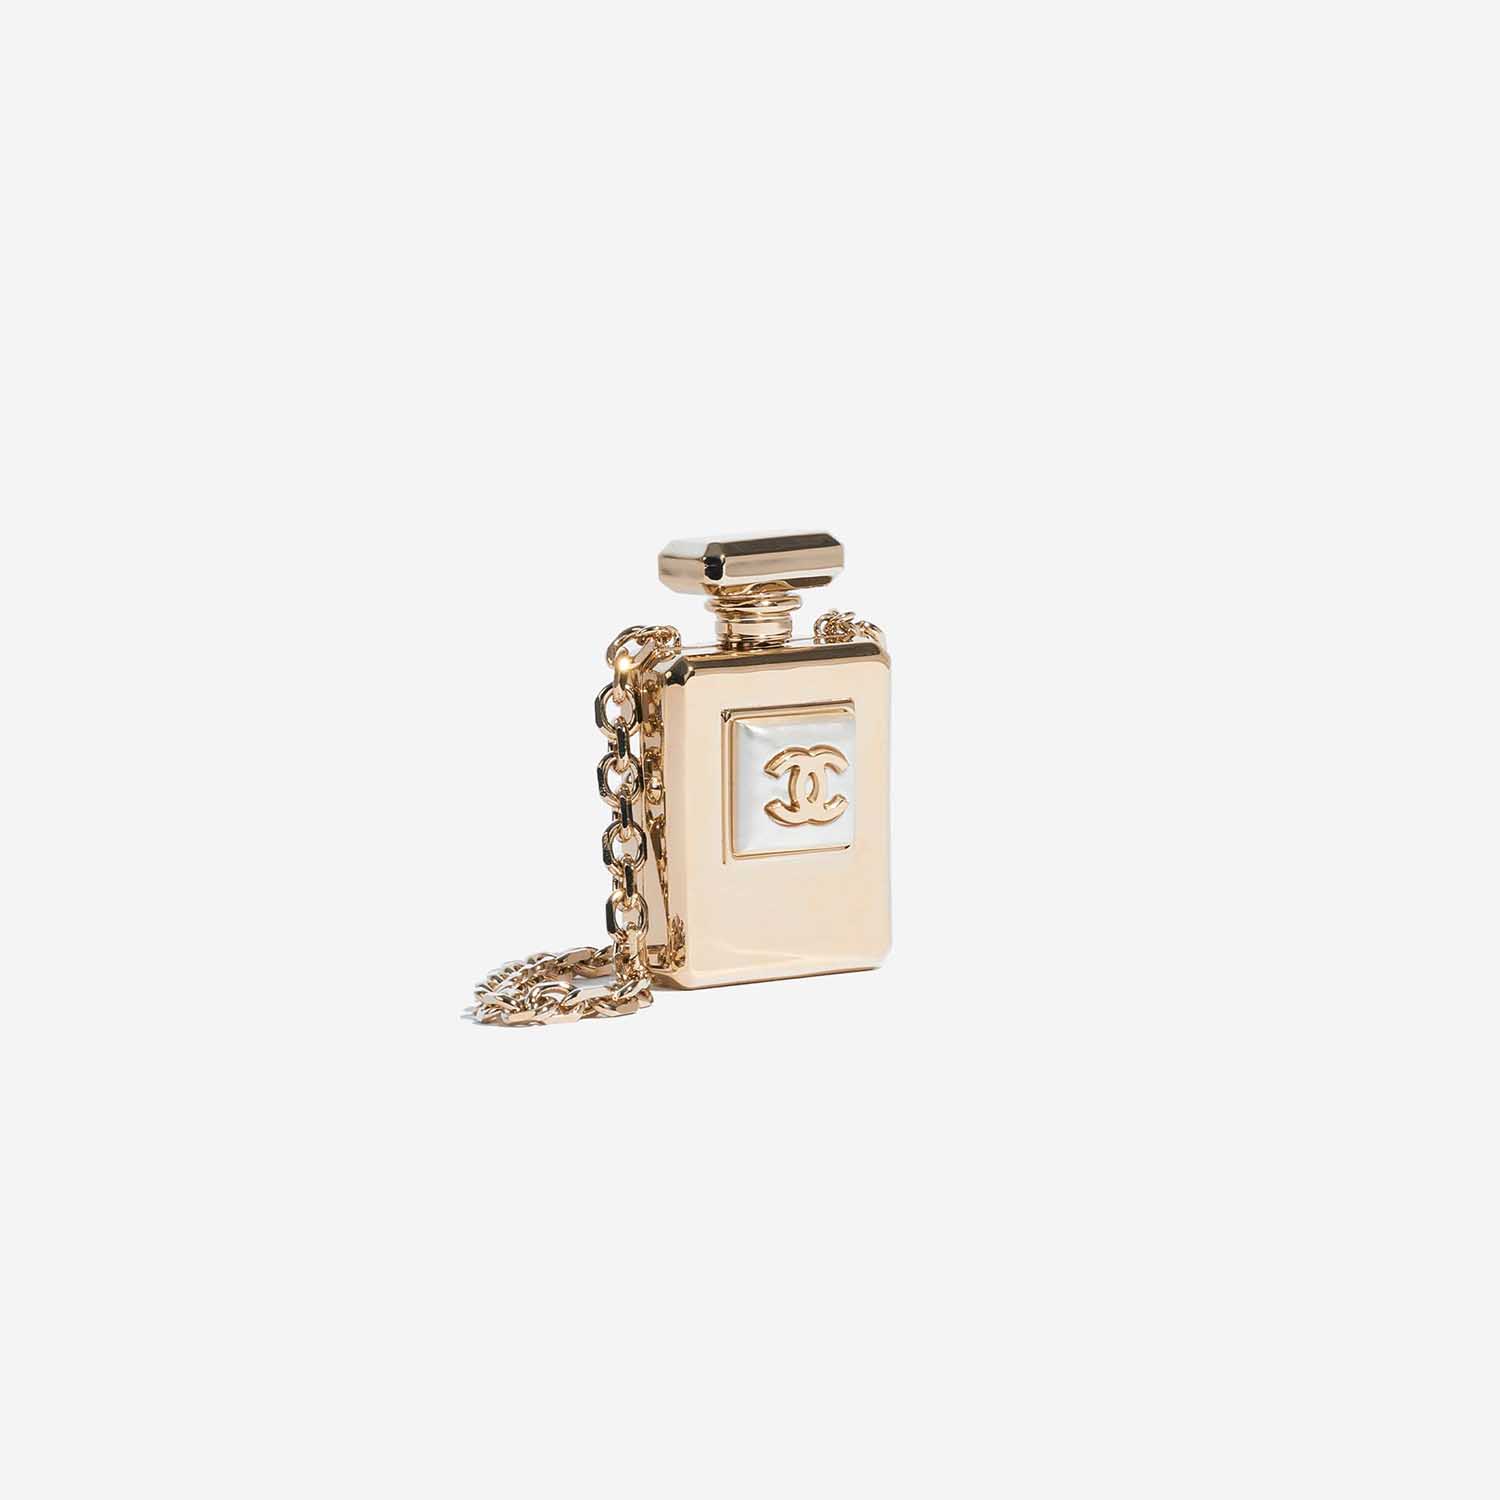 50% Off Unusual Vintage Faux Baroque Pearl Perfume Locket Necklace Clip  Earrings Set